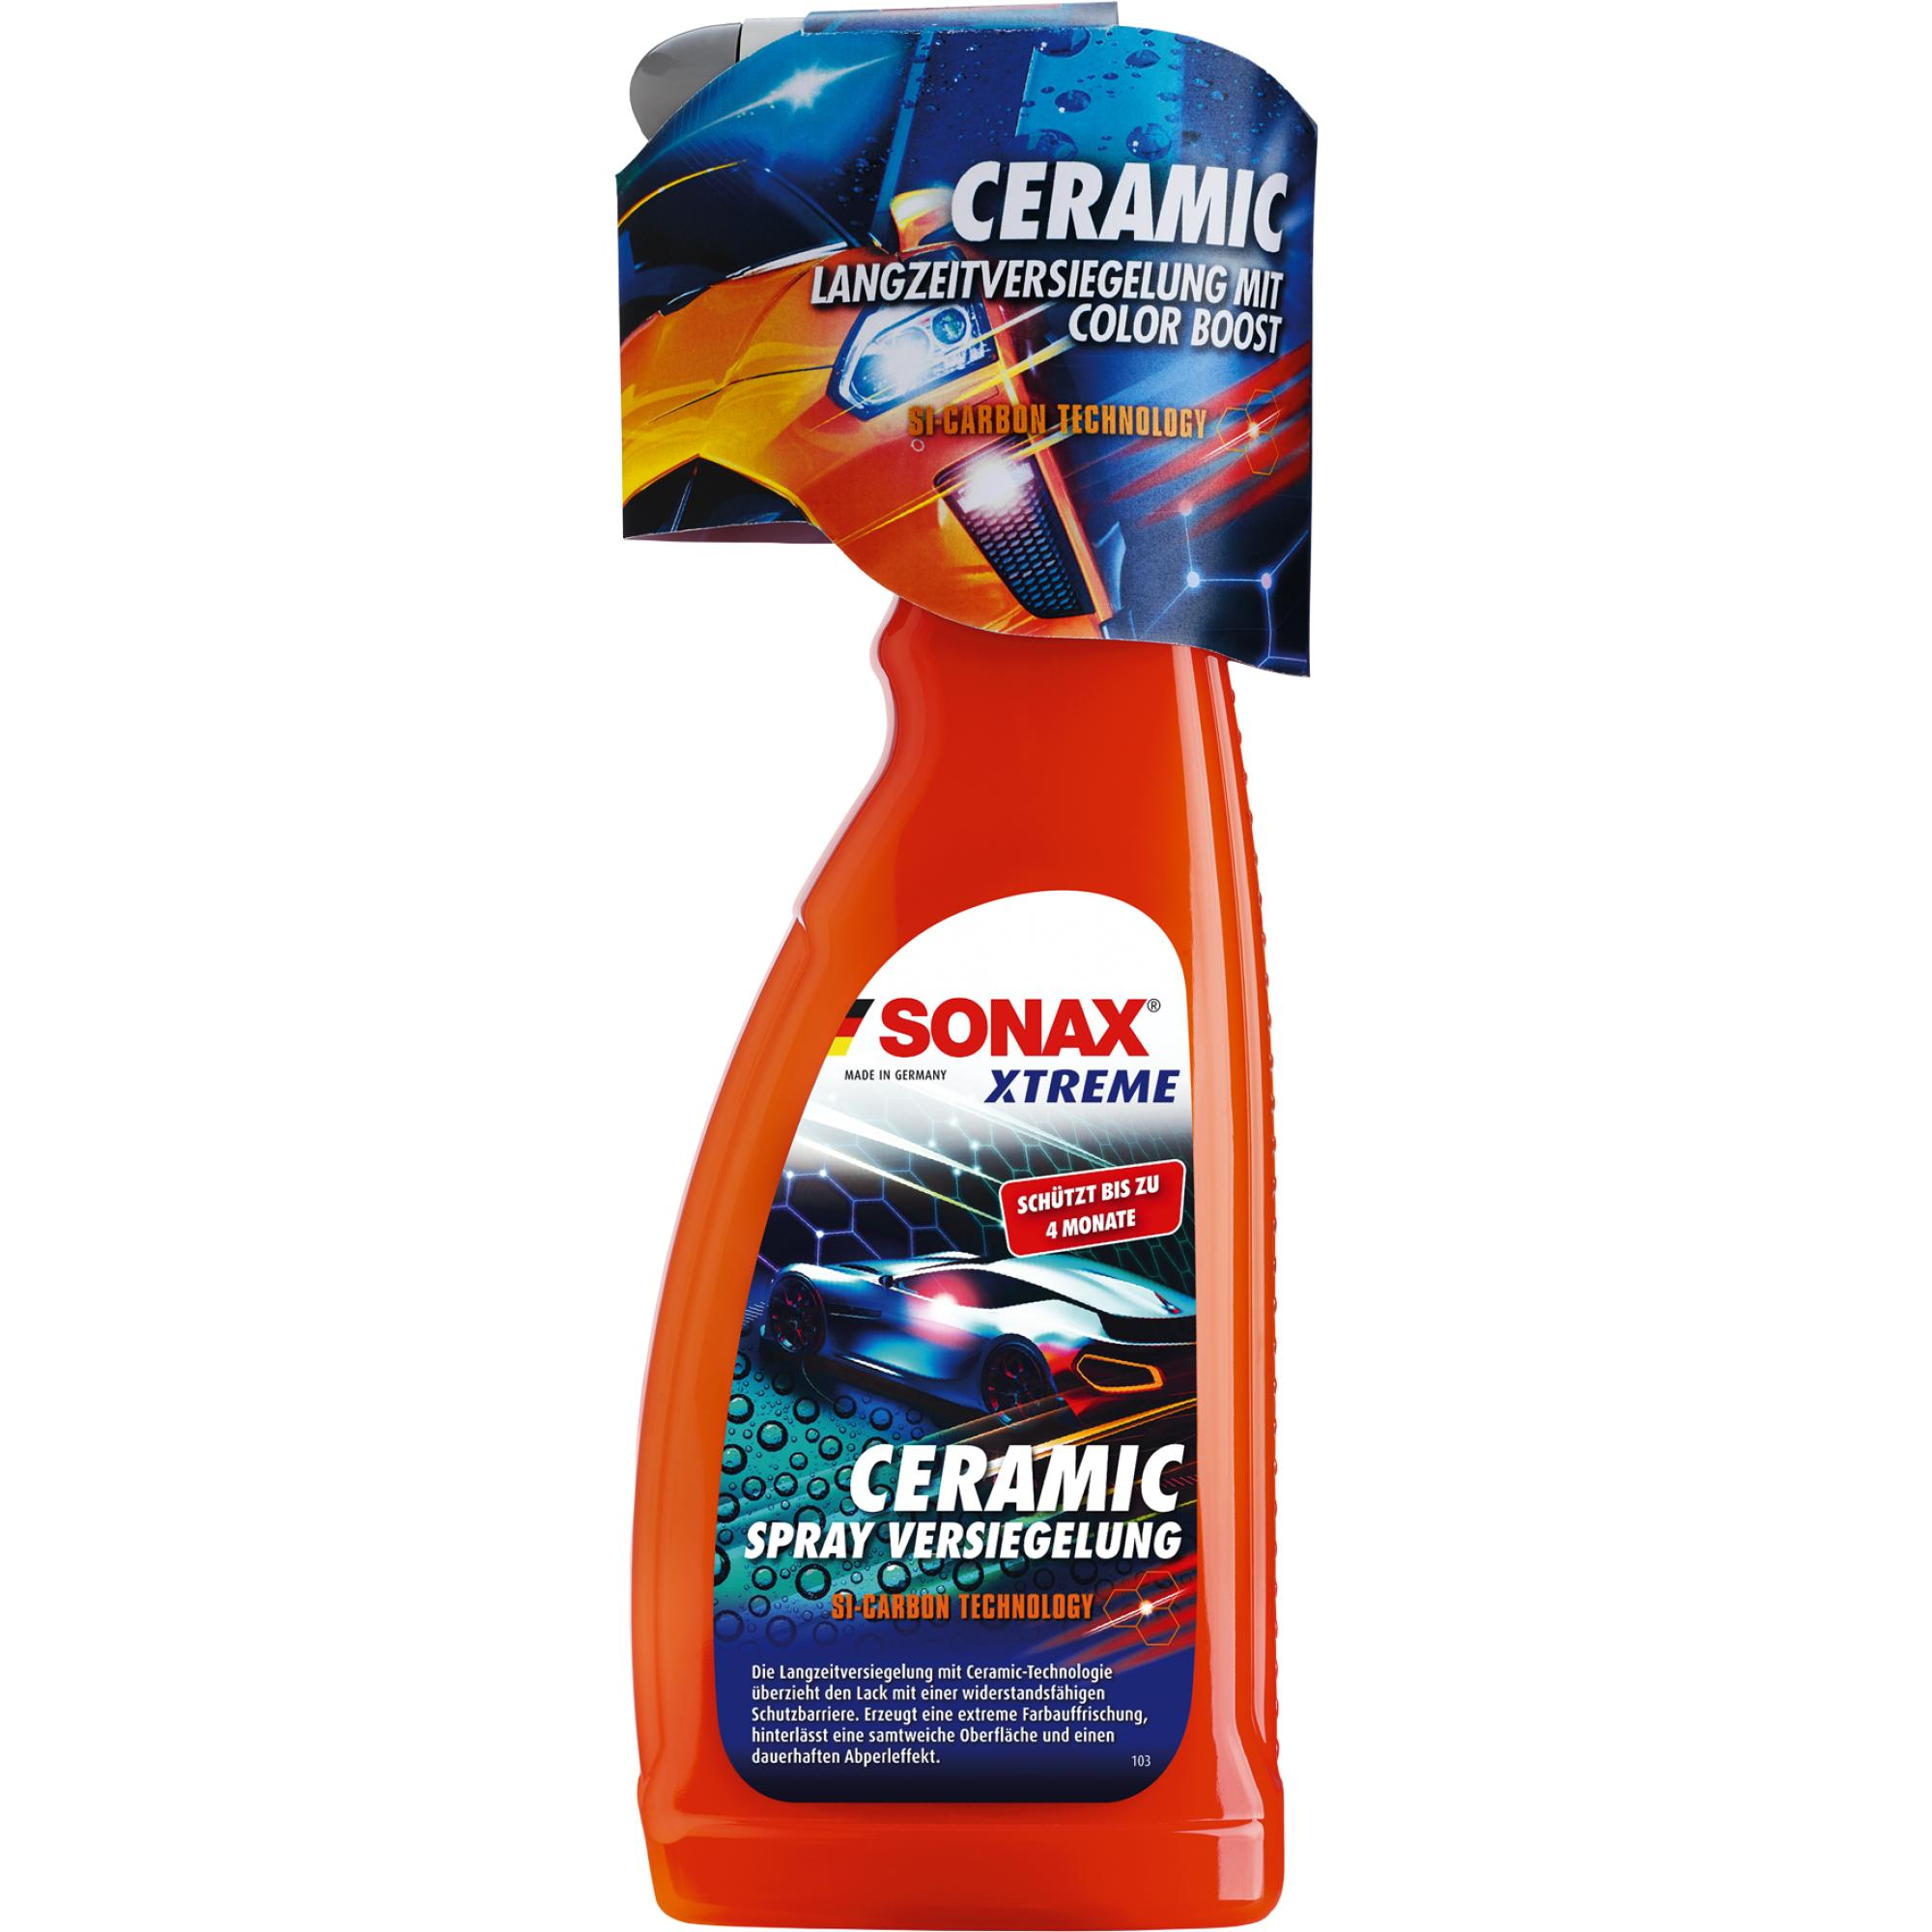 Ceramic-Sprayversiegelung 'Xtreme' 750 ml + product picture